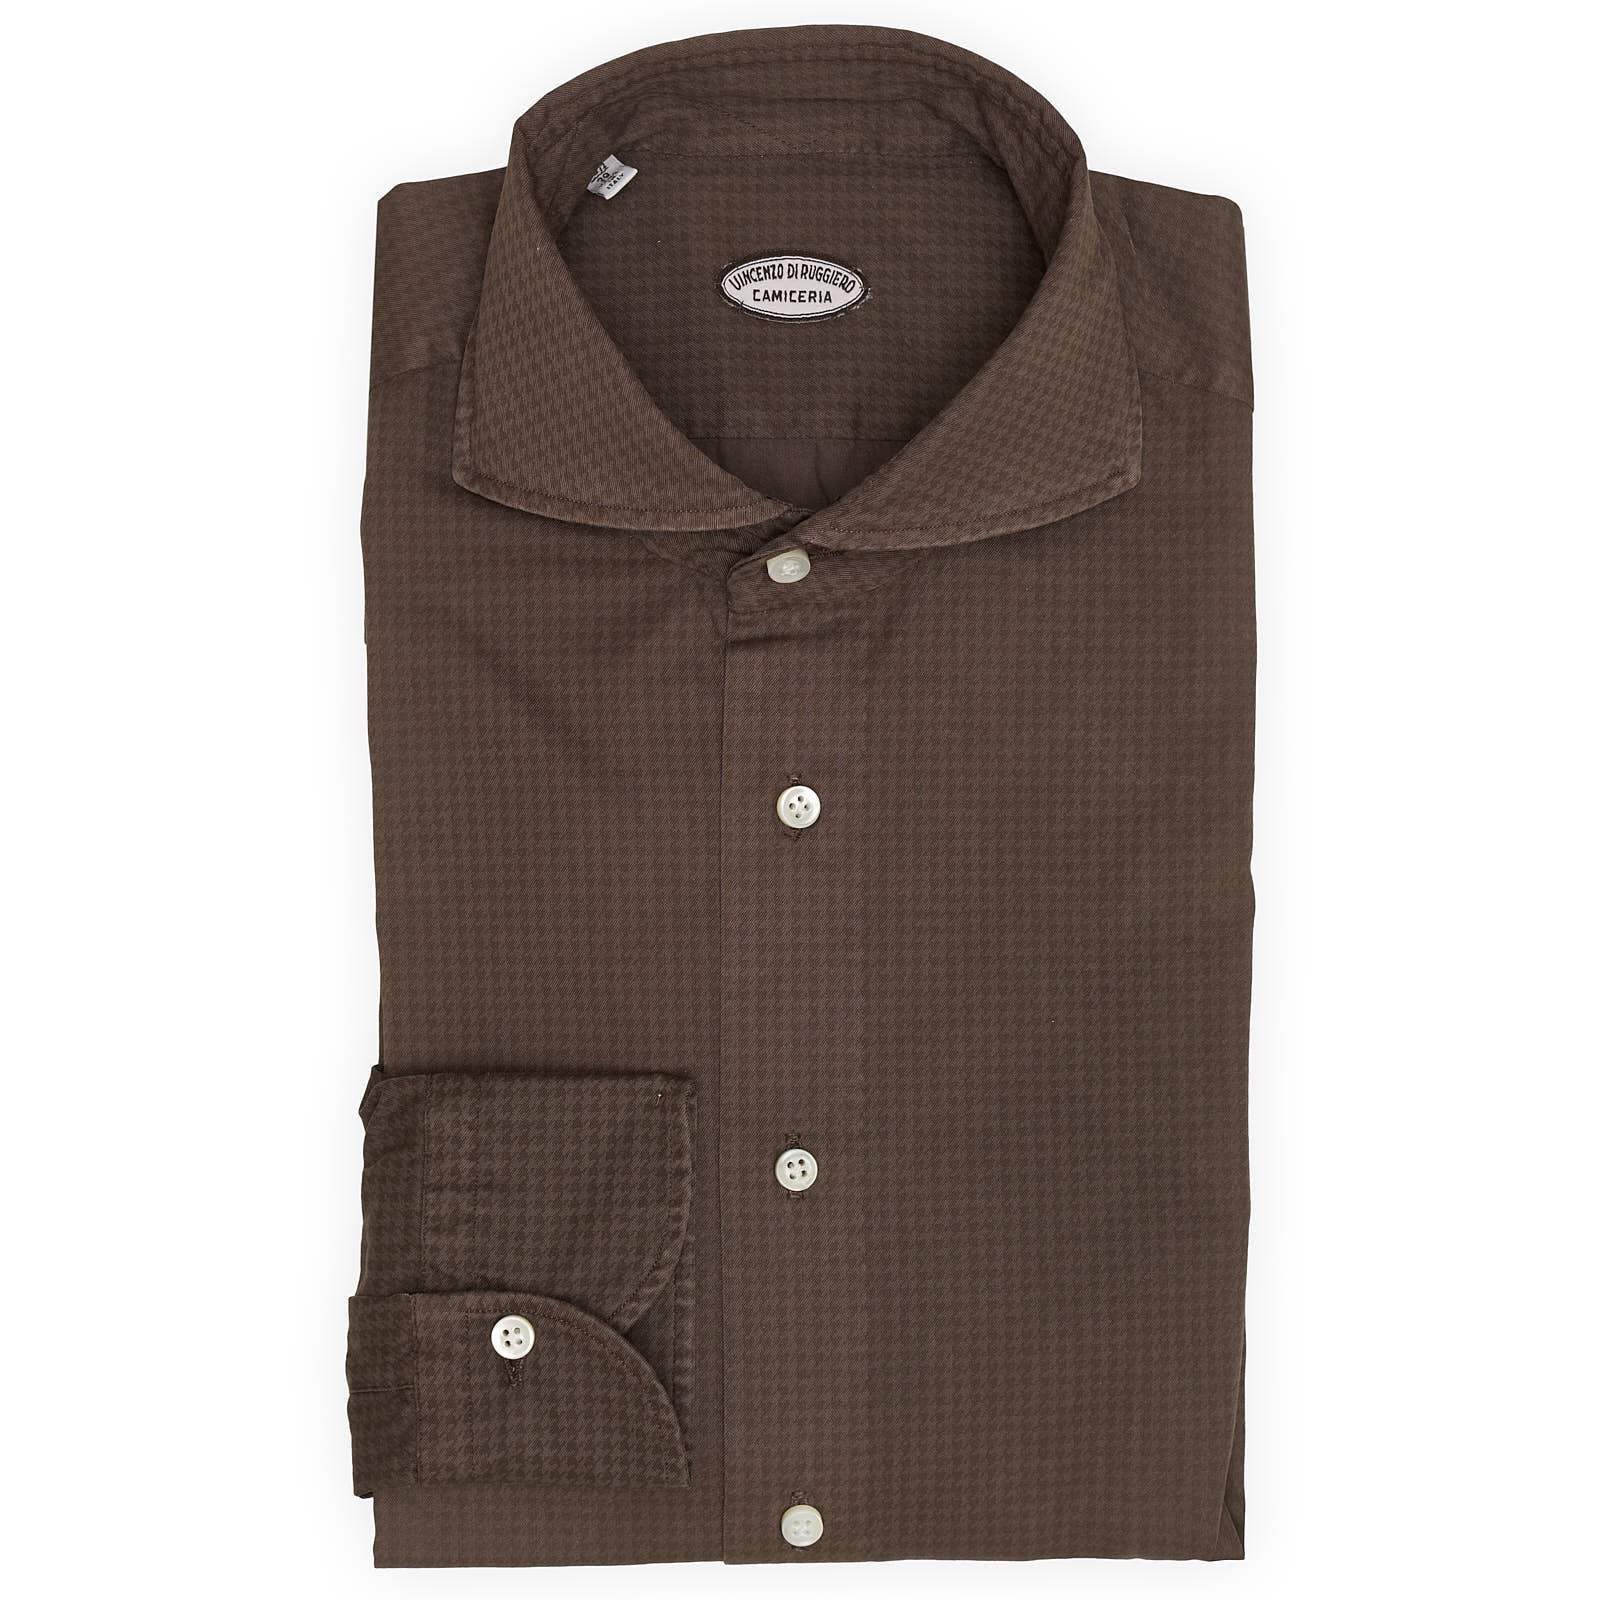 VINCENZO DI RUGGIERO Handmade Brown Sheperd's Check Cotton Shirt EU 39 NEW US 15.5